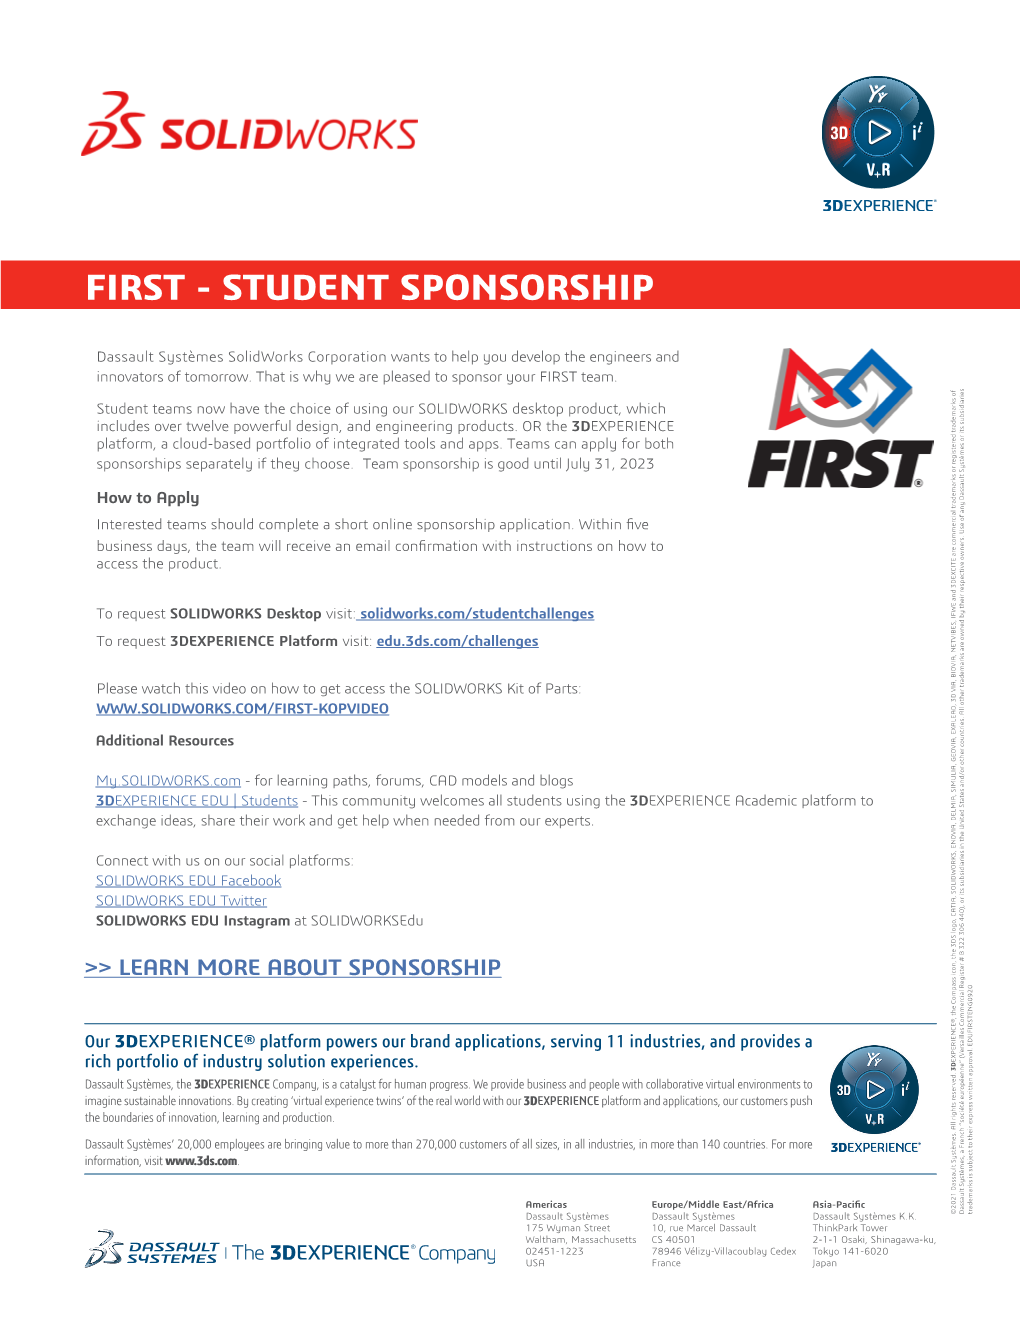 First - Student Sponsorship